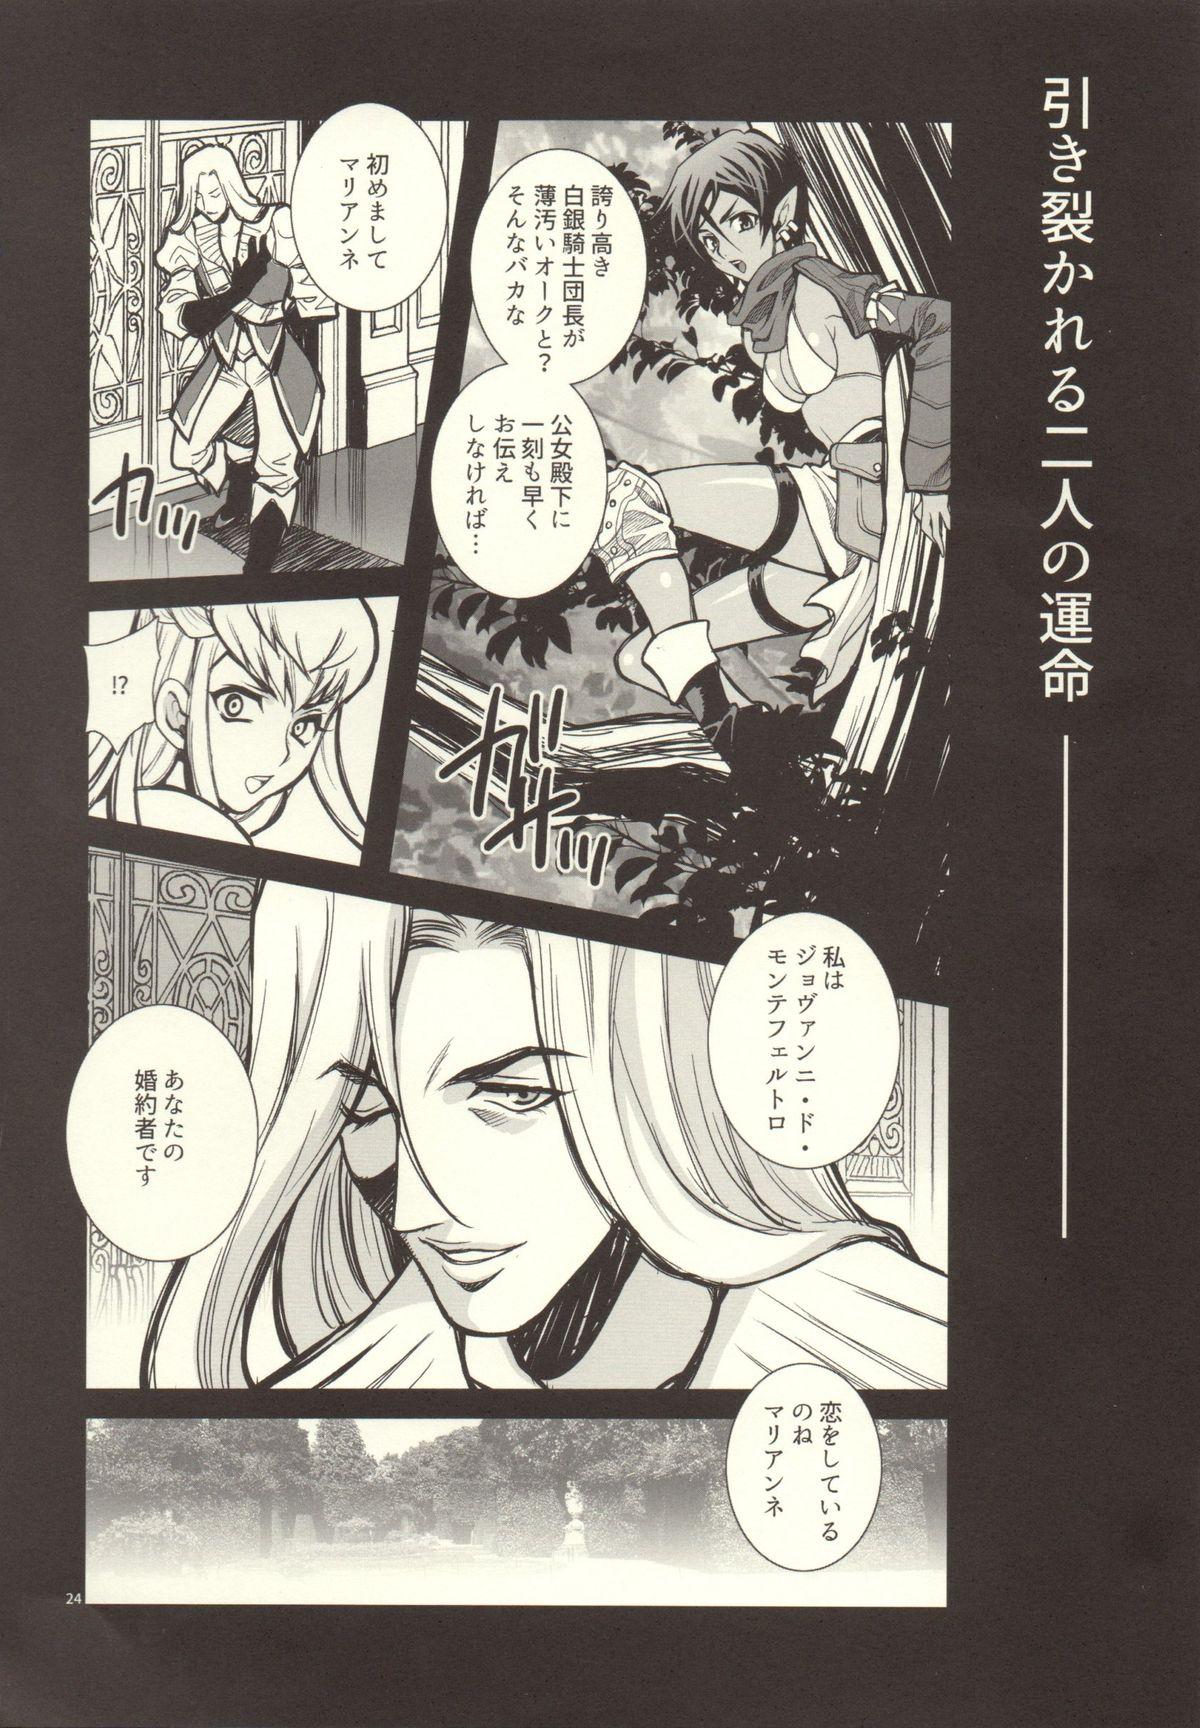 Yukiyanagi no Hon 37 Buta to Onnakishi - Lady knight in love with Orc 22